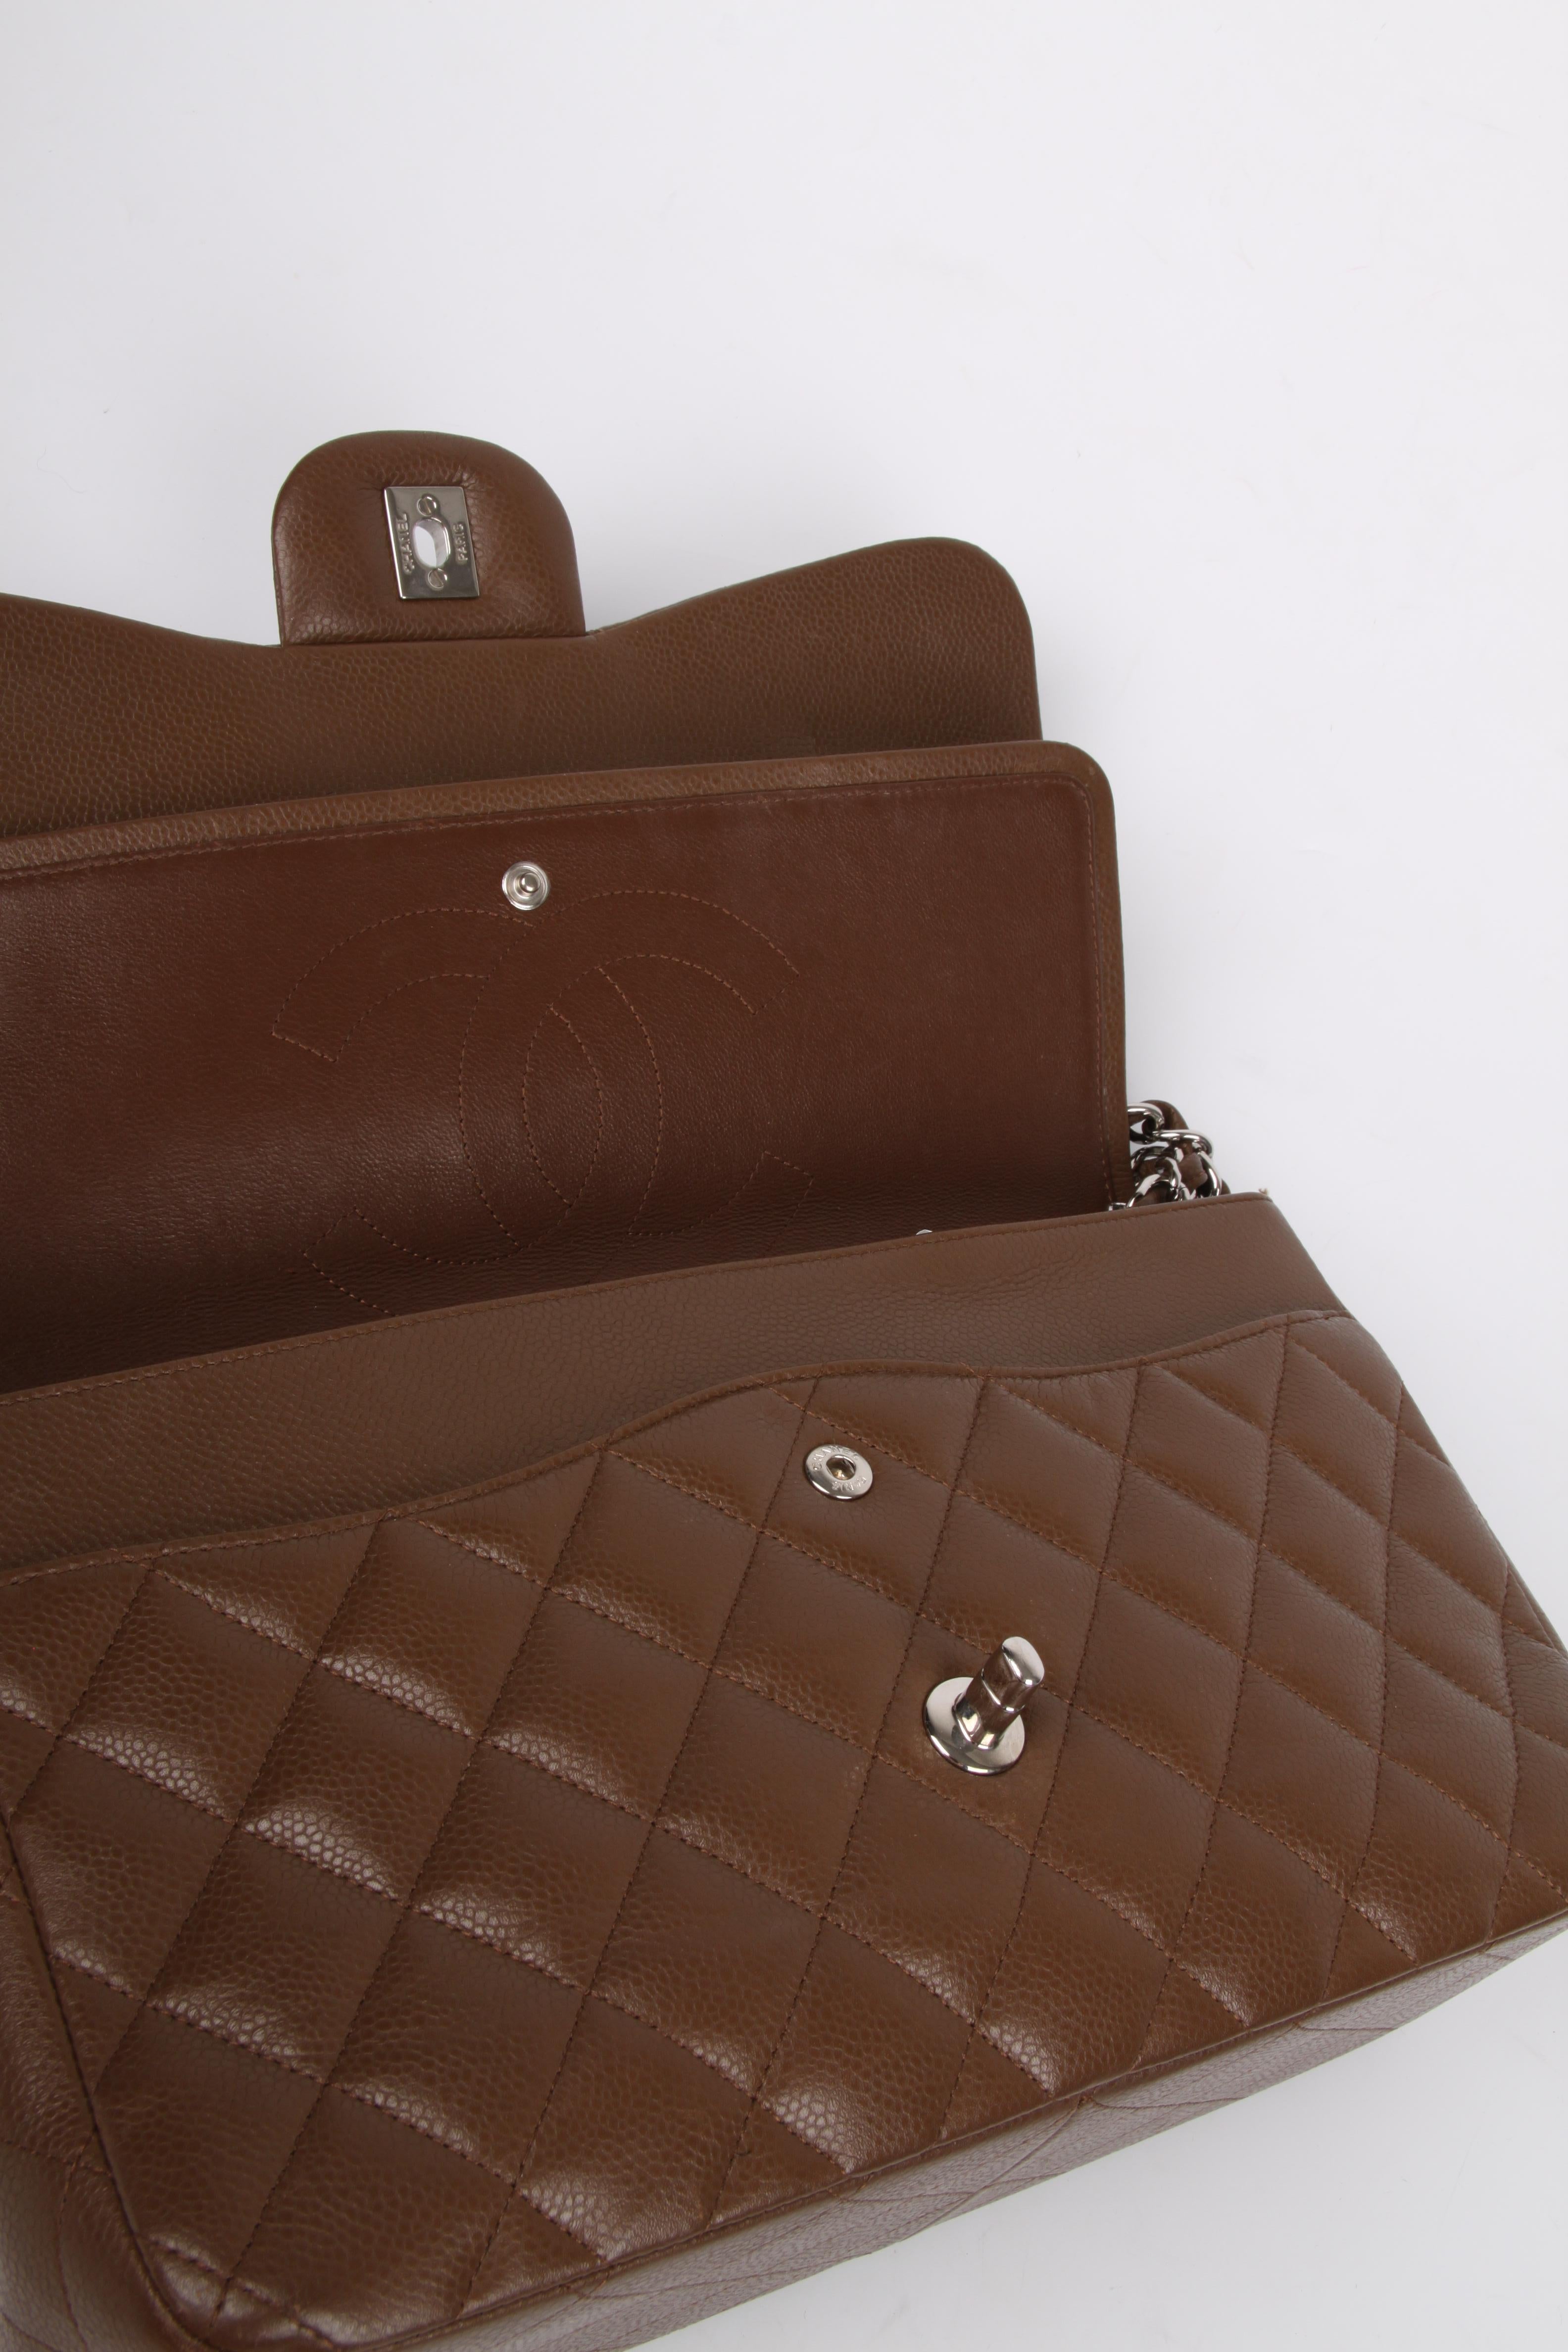 Women's Chanel 2.55 Timeless Jumbo Flap Bag - brown/silver